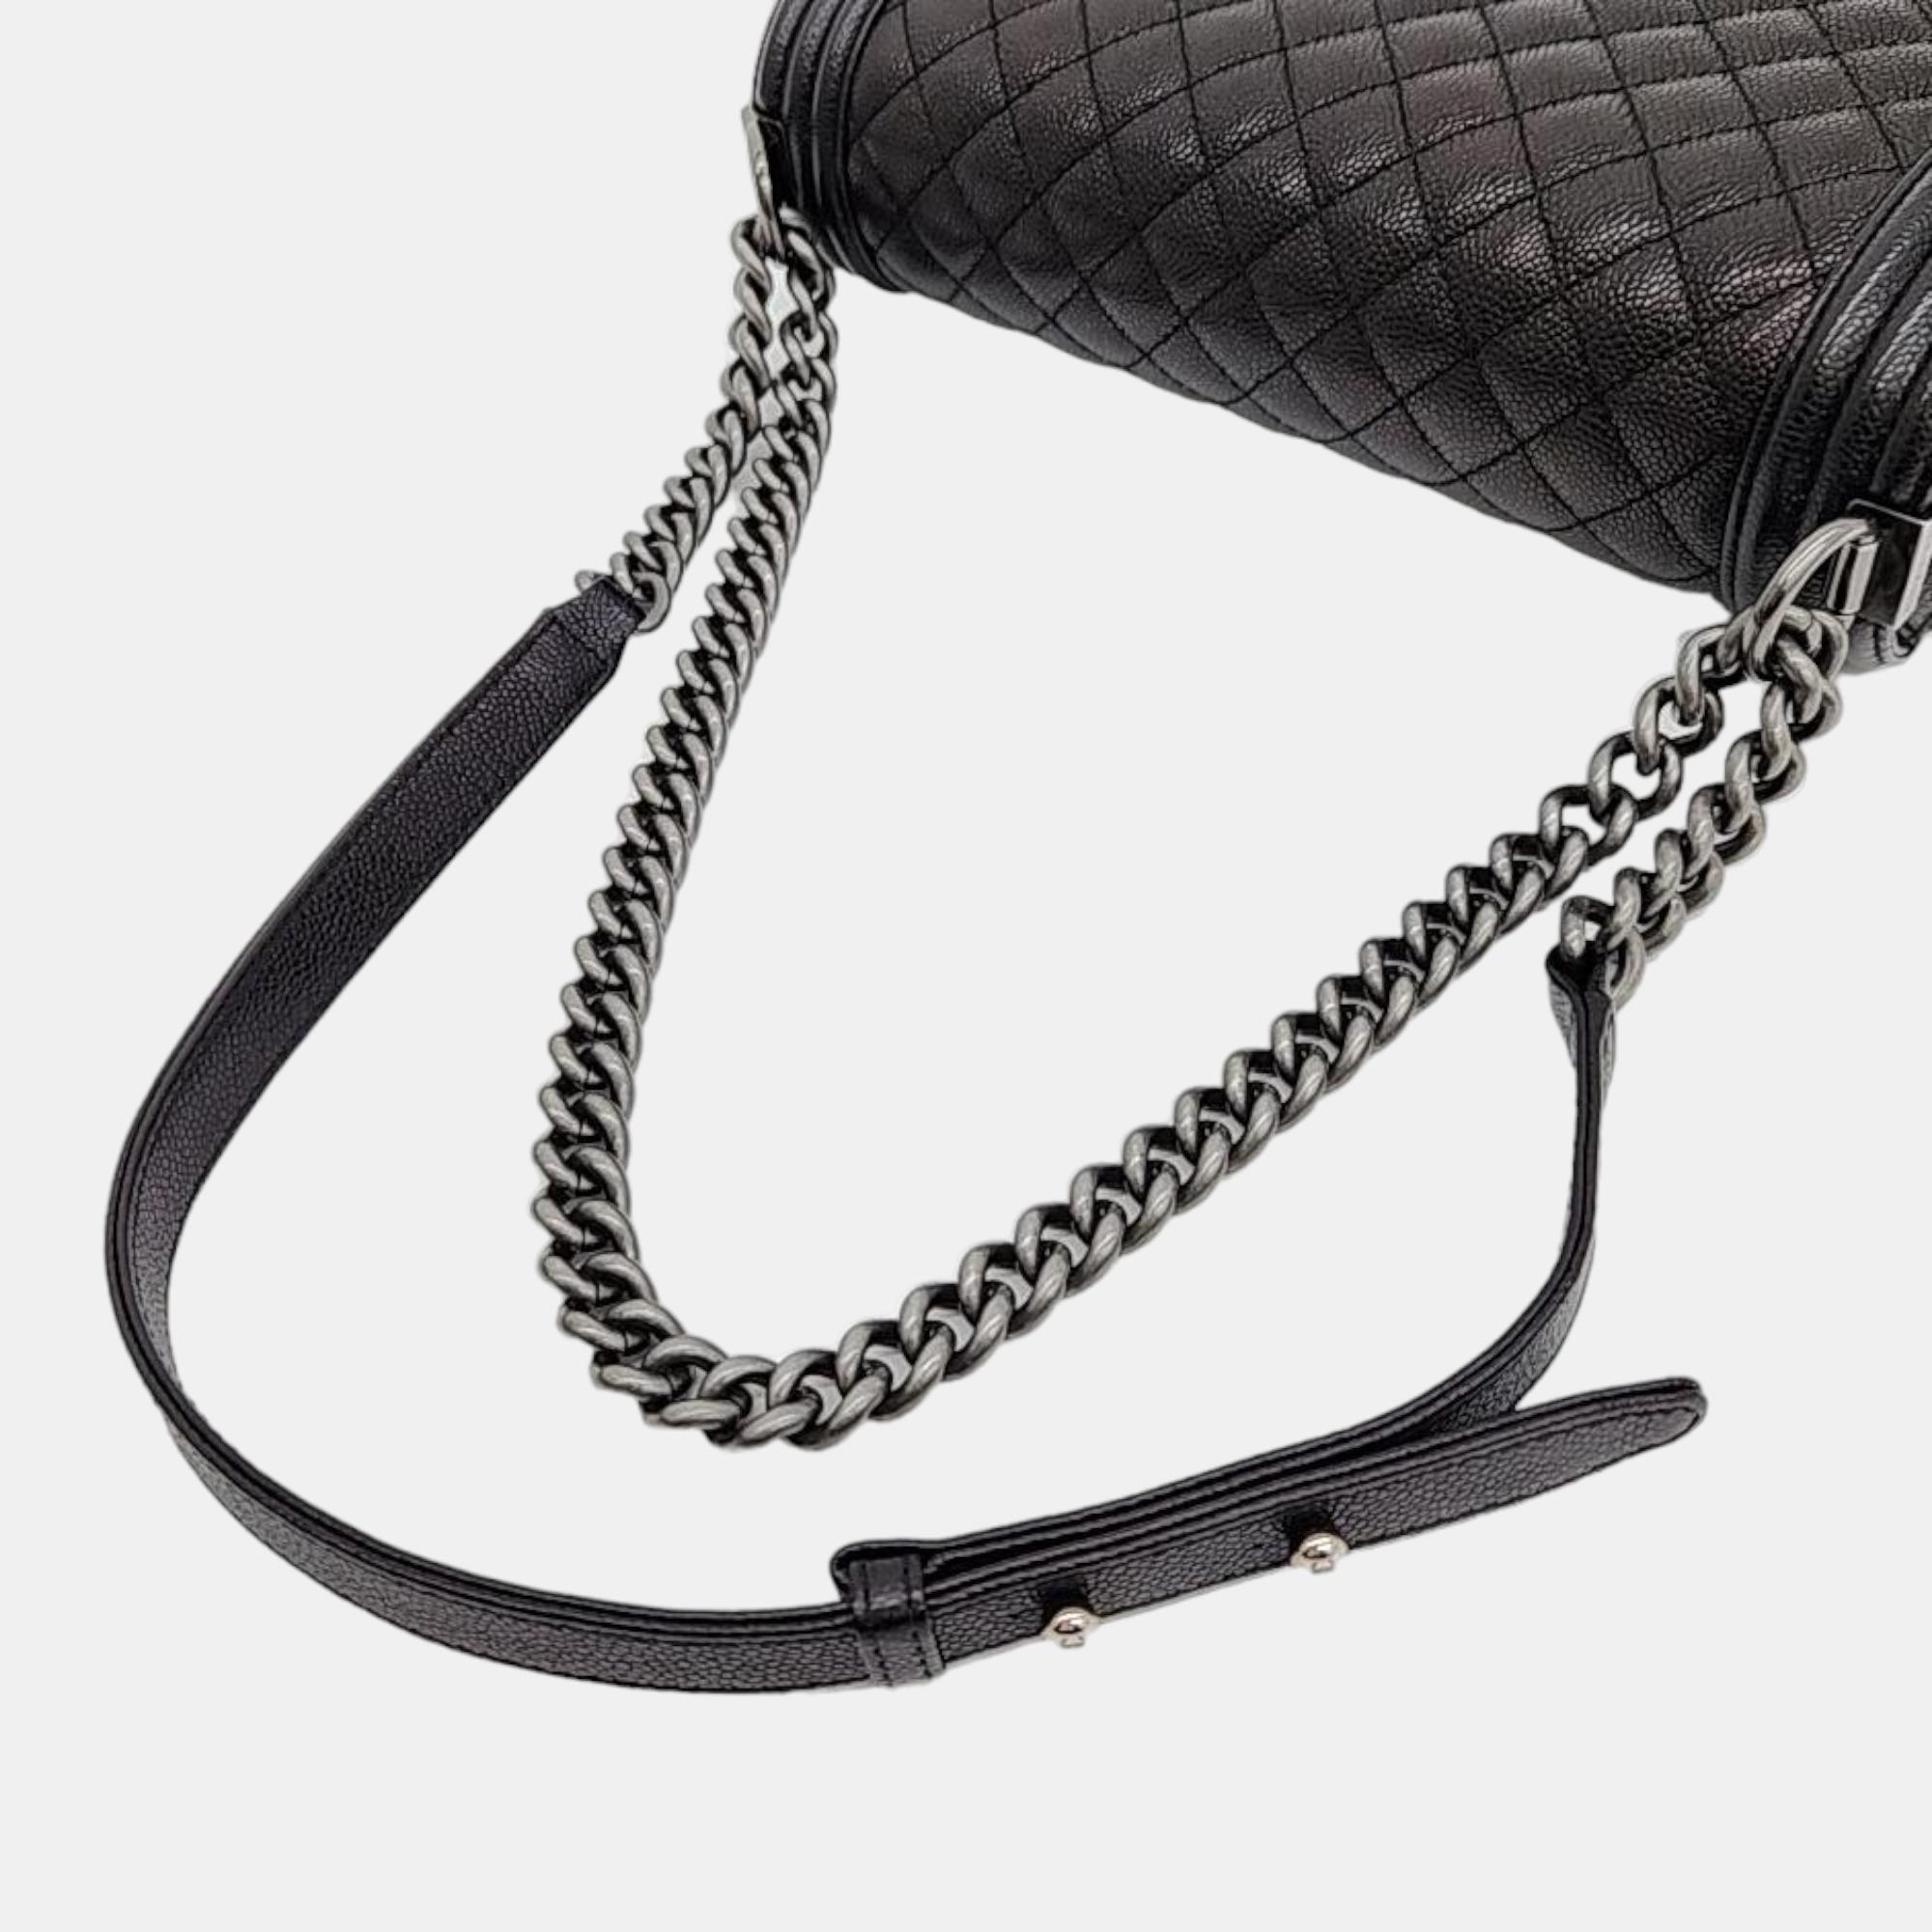 Chanel Caviar Boy Bag New Medium